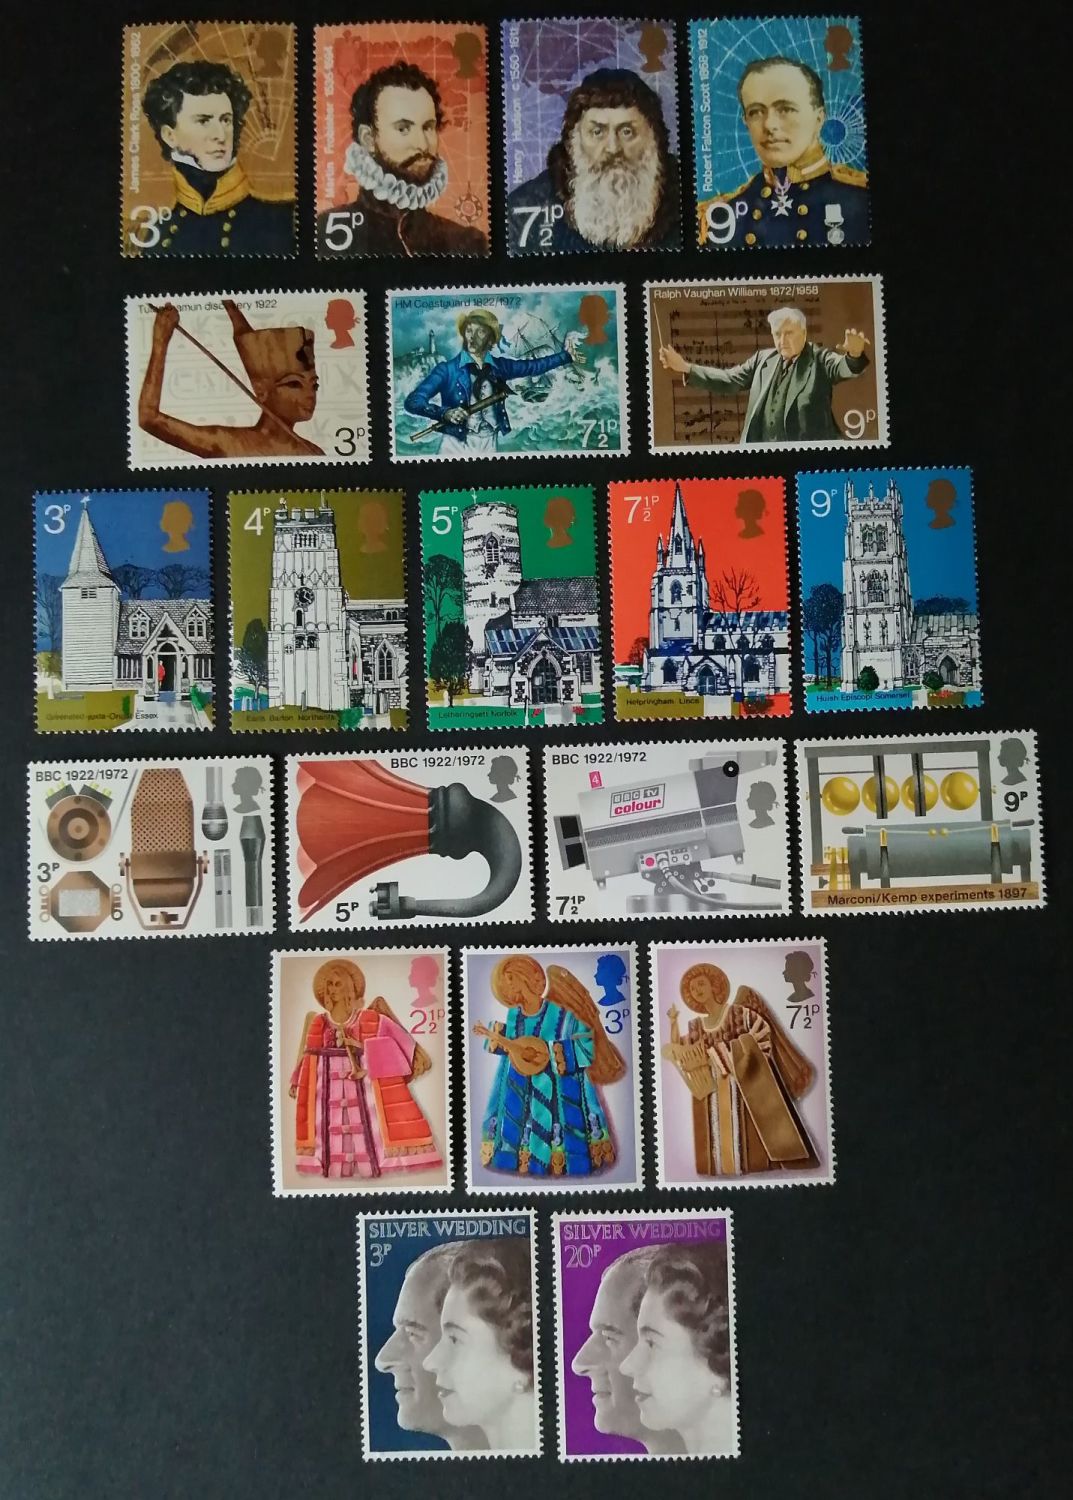 British Stamps 1972 Full Year Set - MINT (P363)